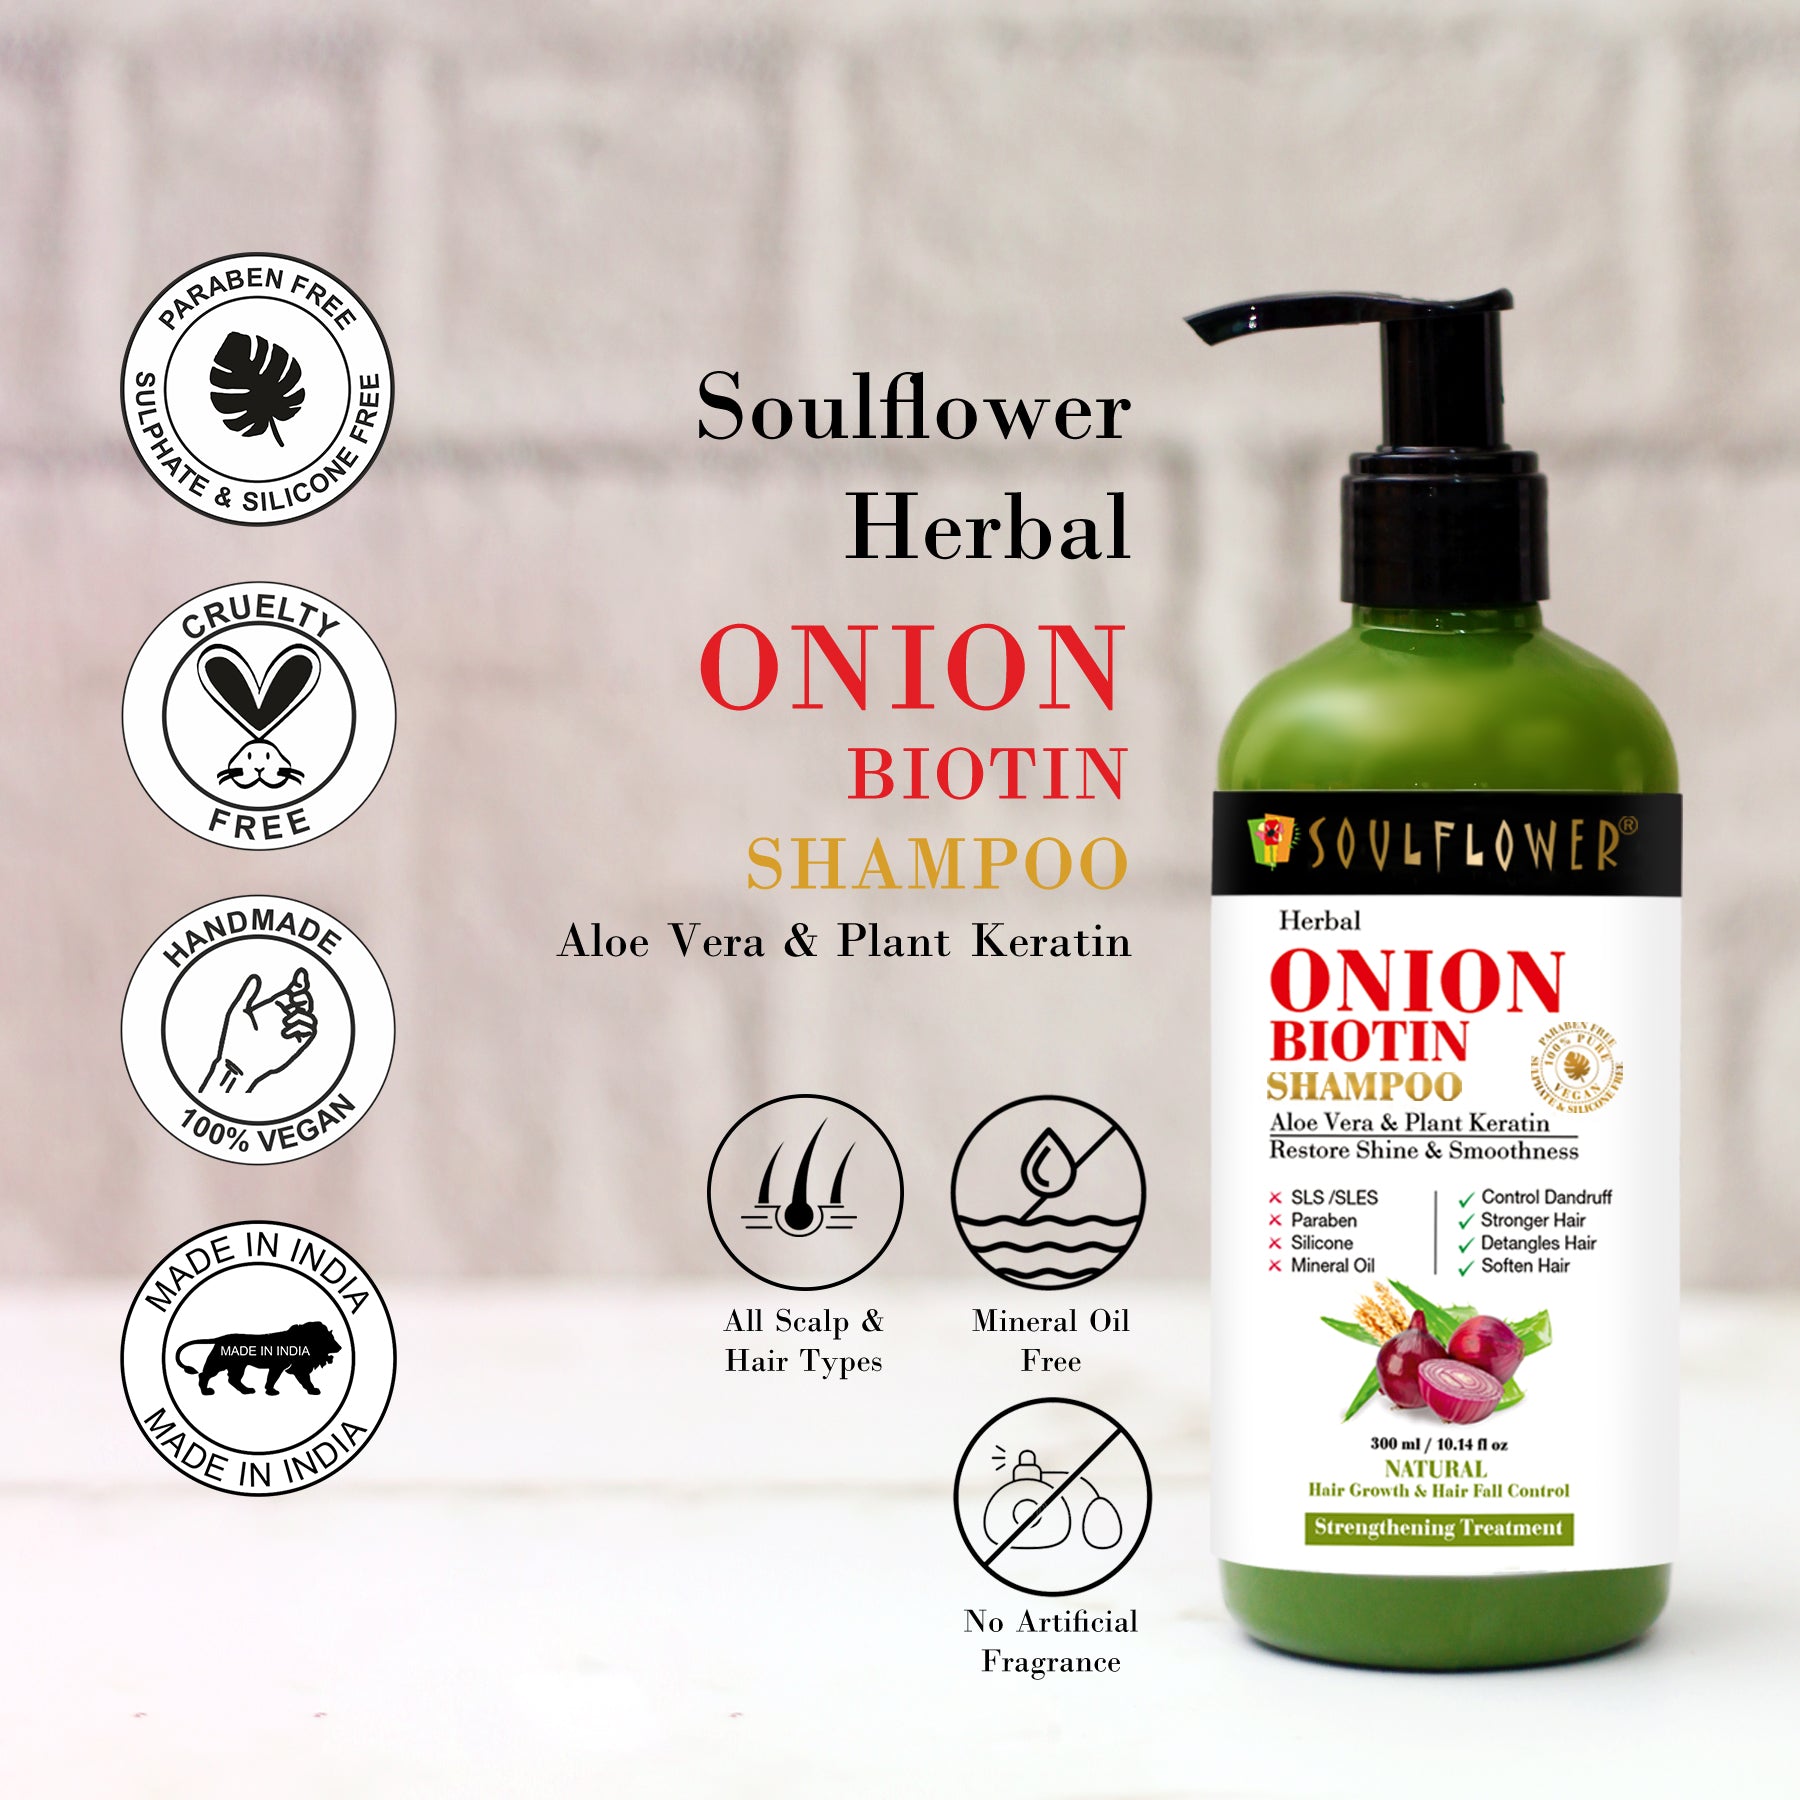 Soulflower Onion Biotin Shampoo